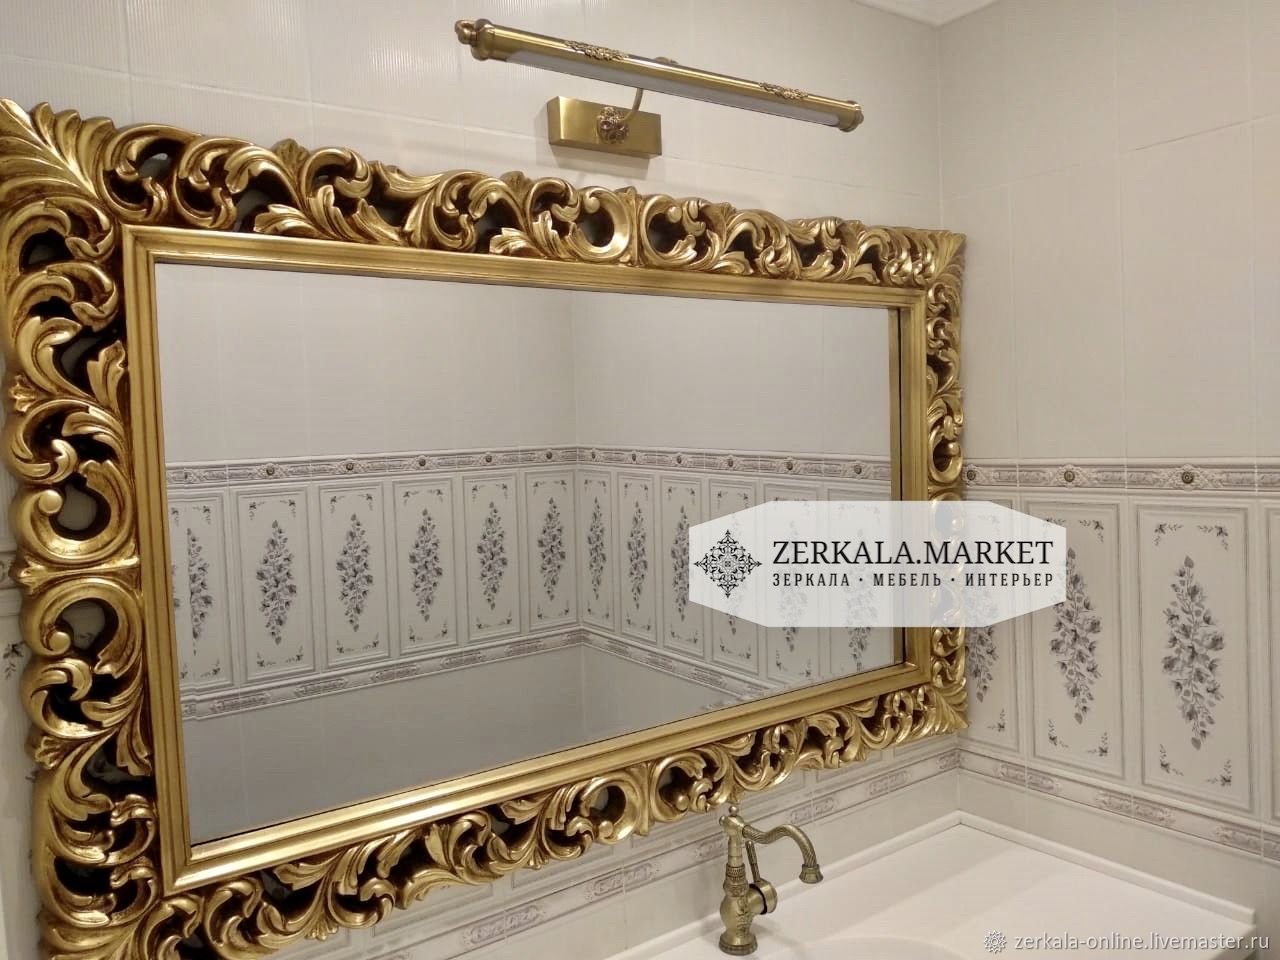 Зеркала улан удэ купить. Зеркало багет 619 (750*1350). Зеркало в багете для ванной комнаты. Зеркала в ванную комнату с багетом. Интерьерный багет для зеркала.